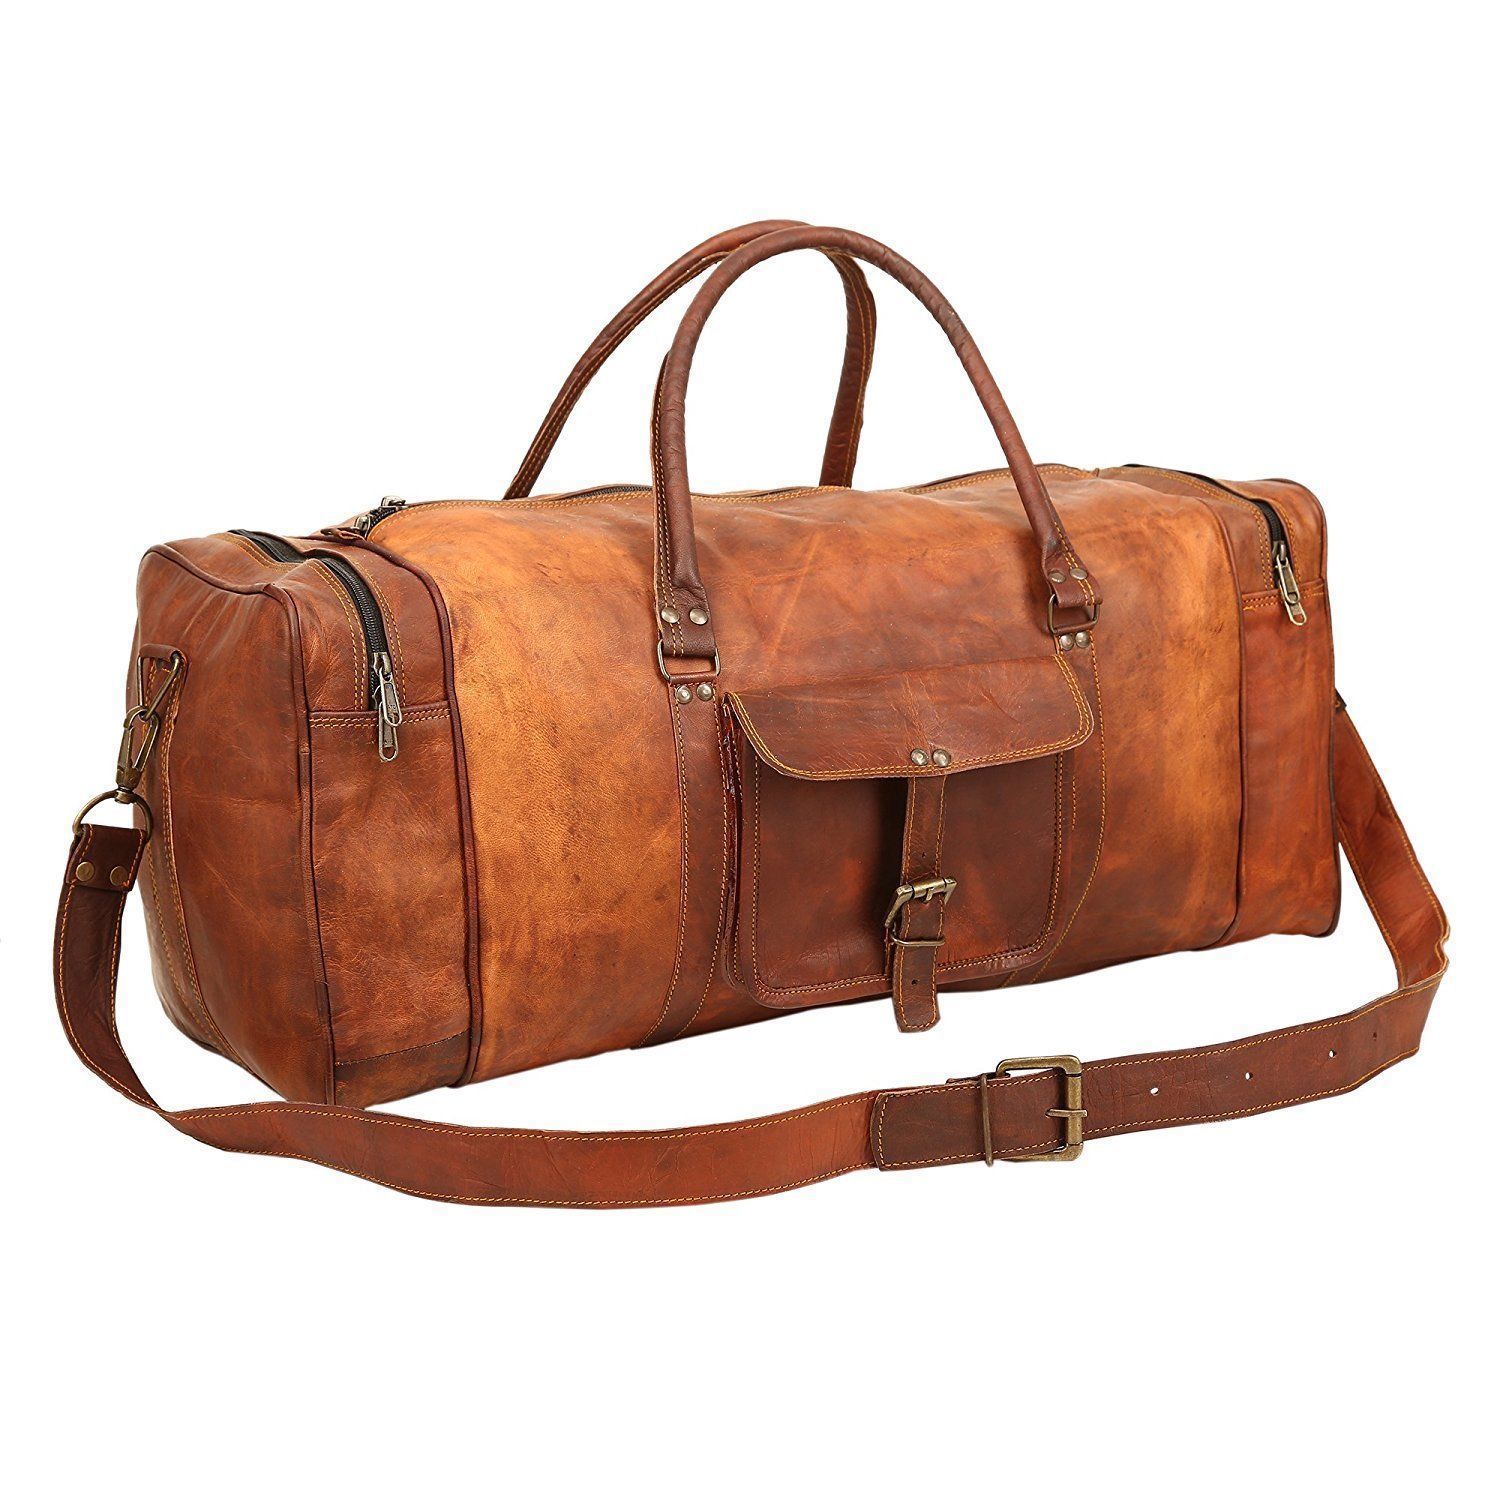 Goat Leather Handmade Travel Luggage Vintage Duffel Bag